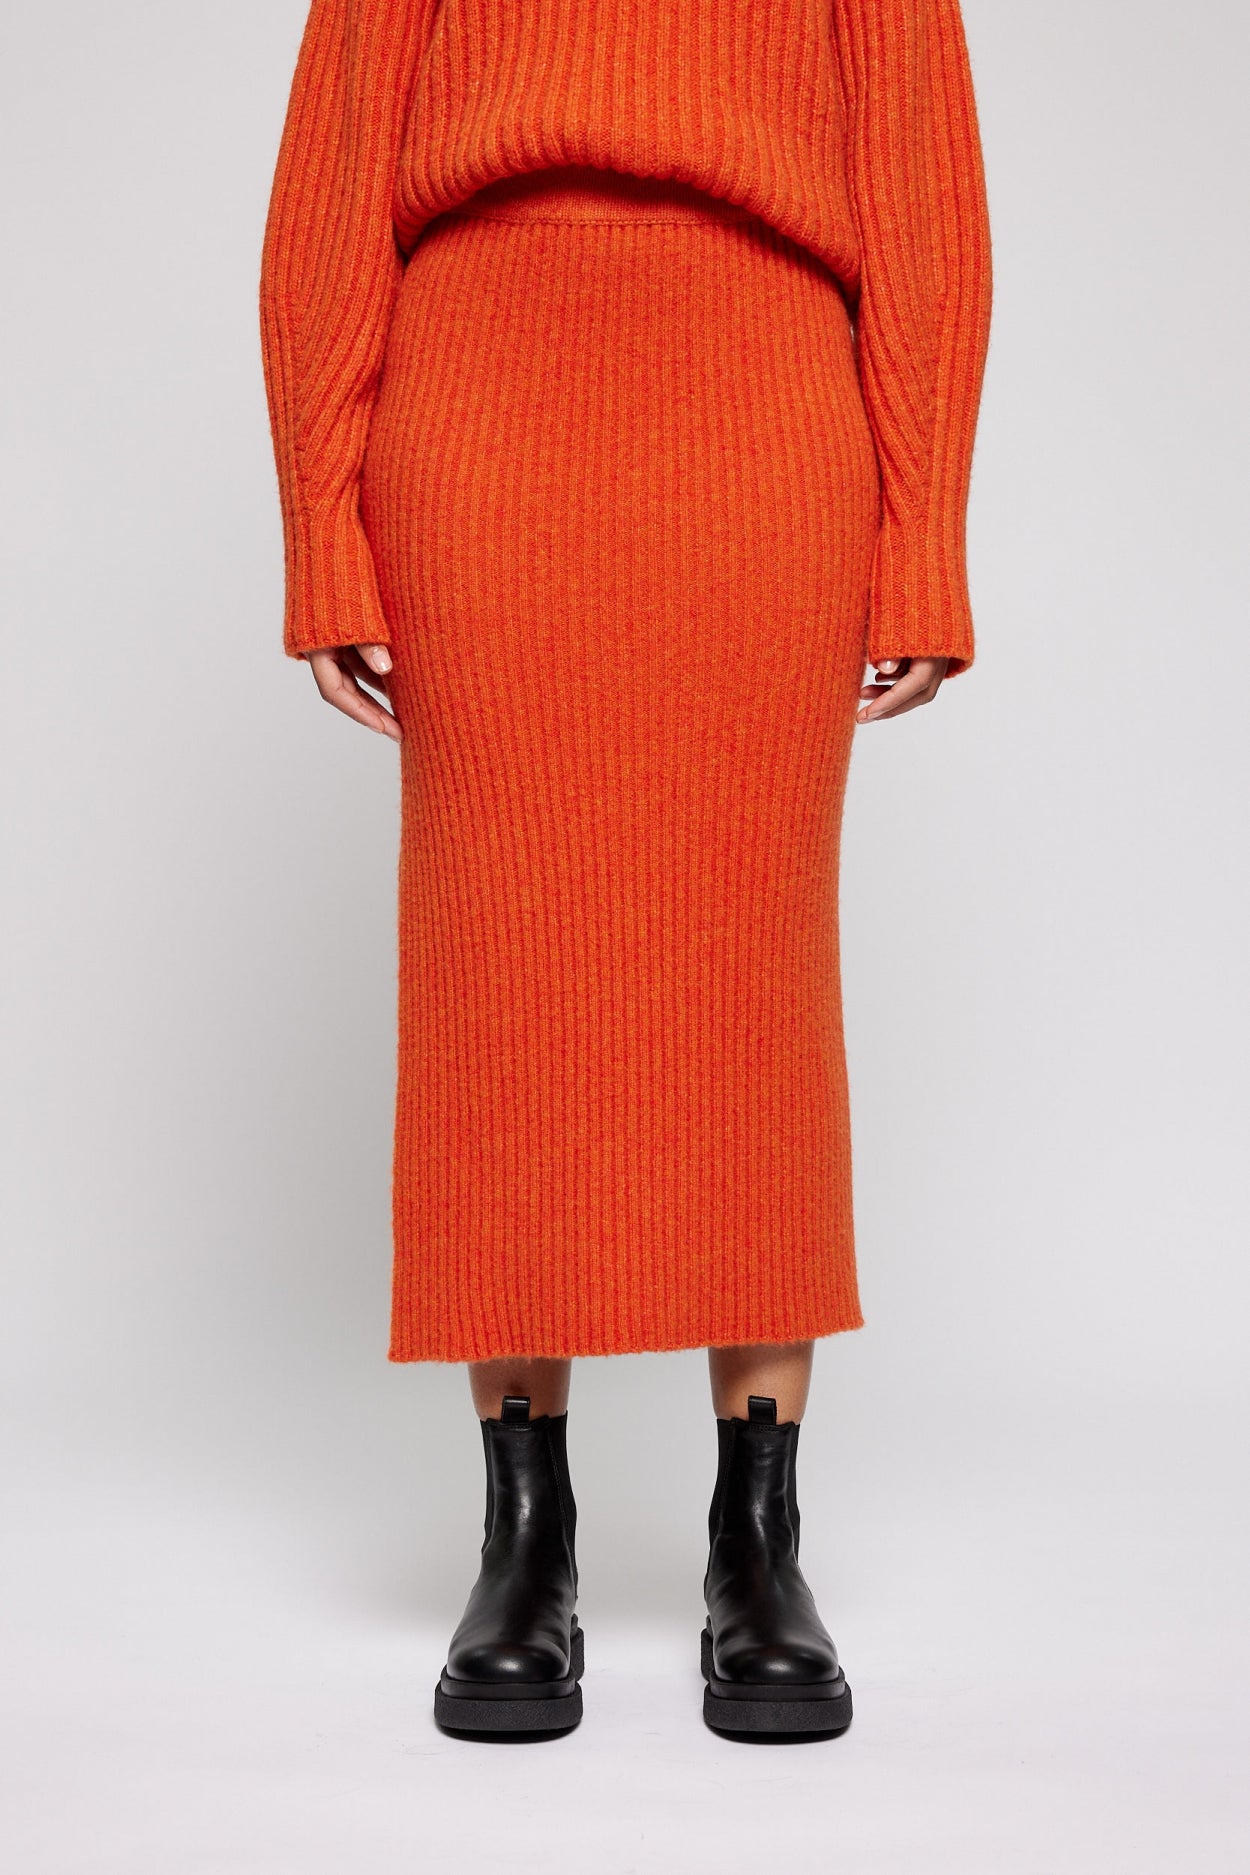 KURE knitted skirt | ORANGE